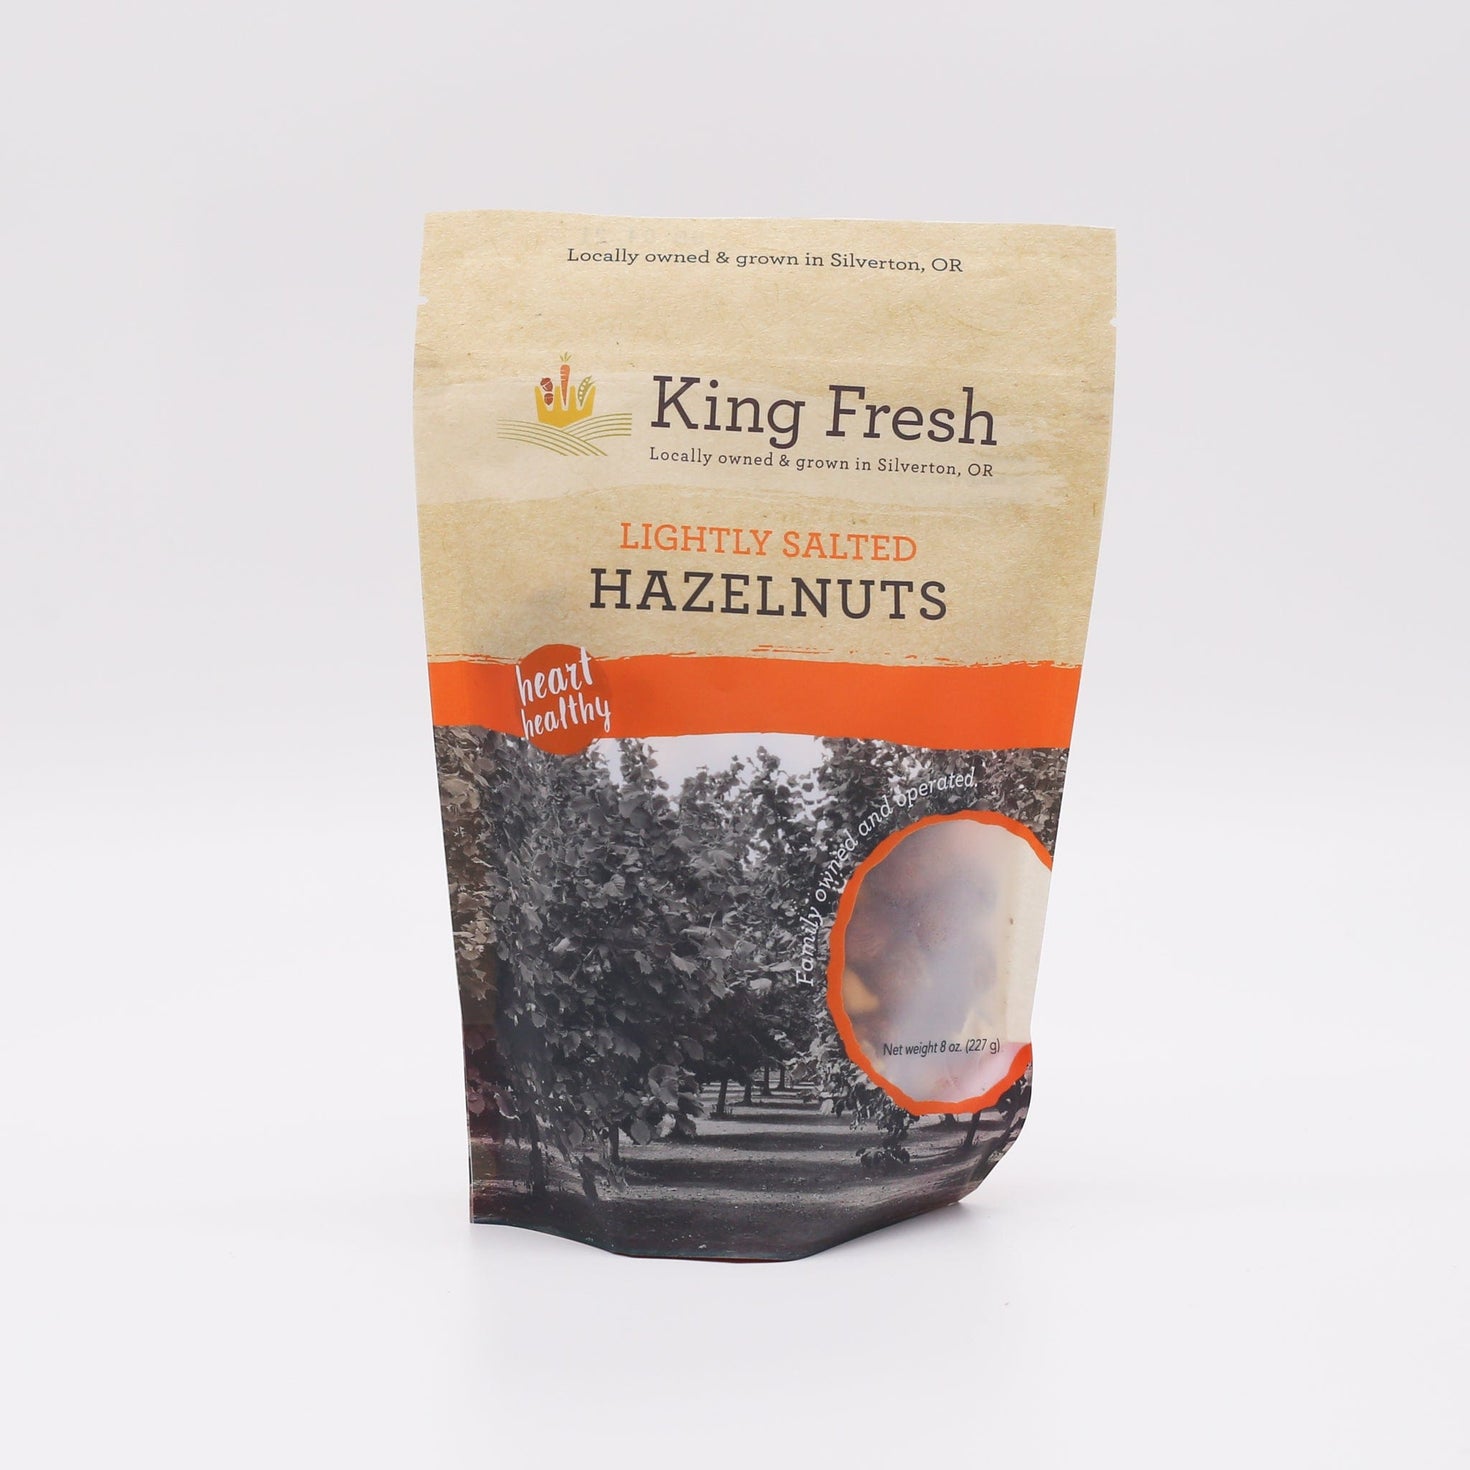 King Fresh Hazelnuts - Lightly Salted 8oz